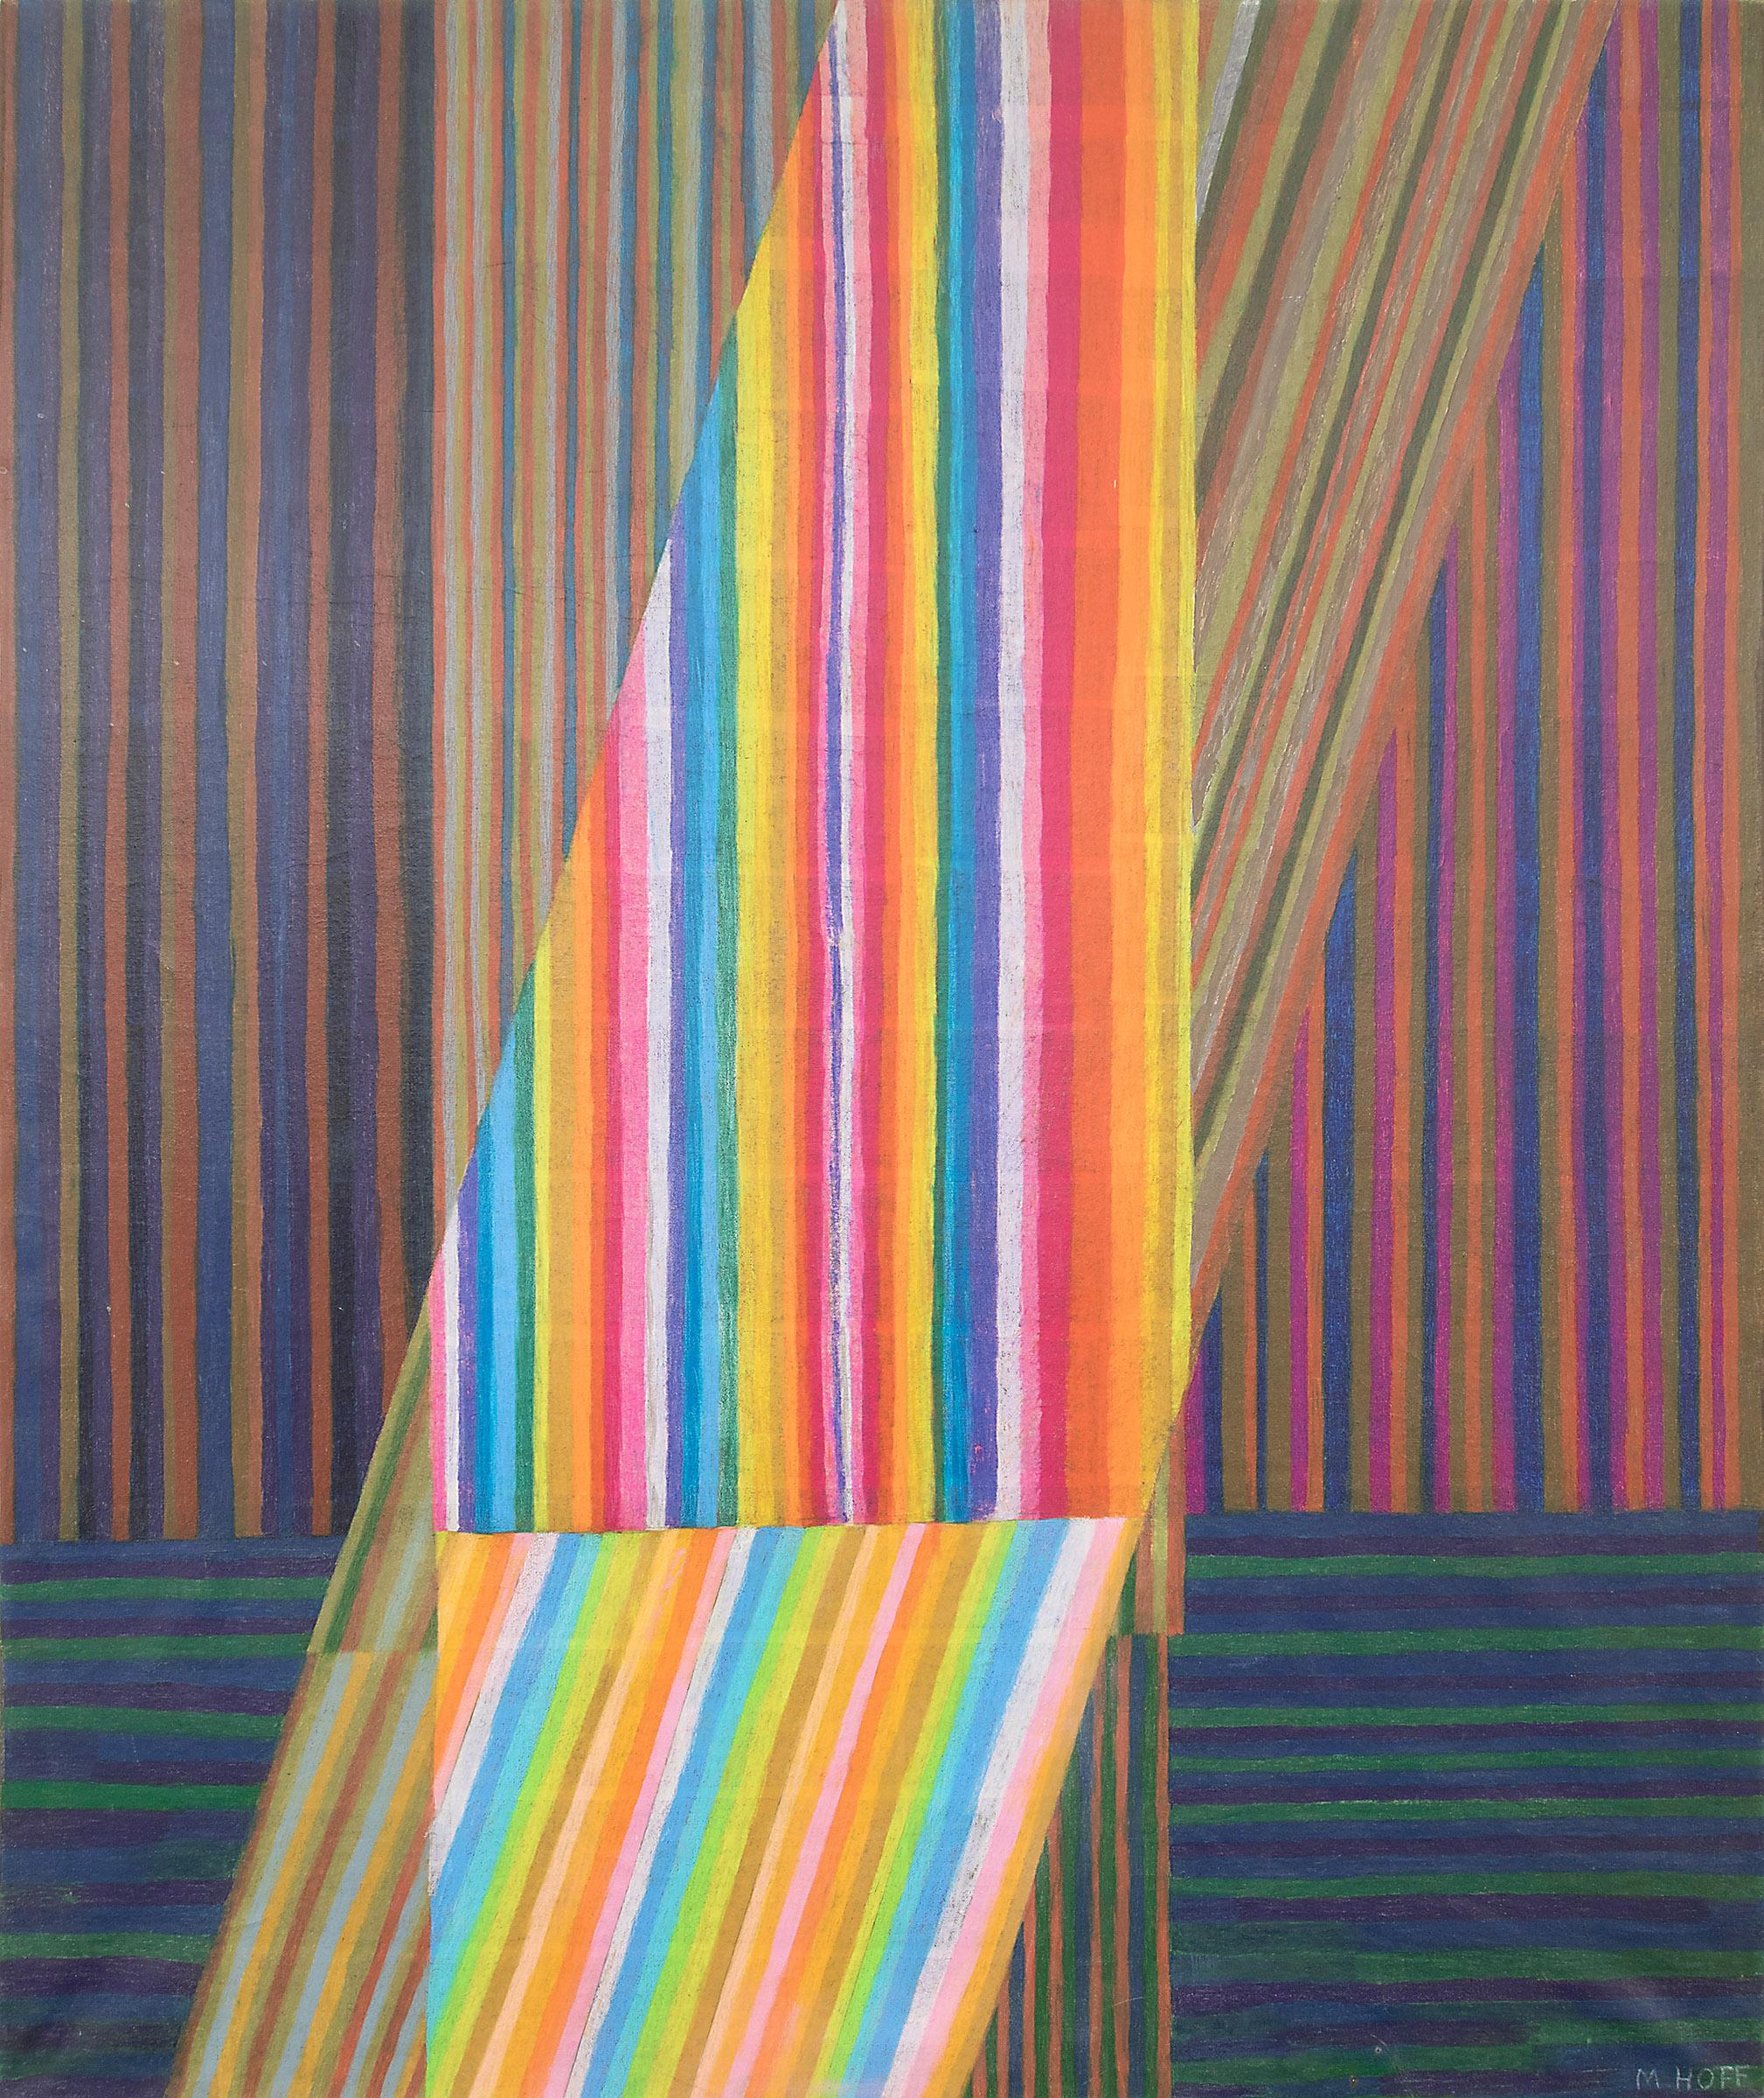 Abstraktes Öl- und Pastellgemälde „Regenbogen River“, großformatig vertikal, 1970er Jahre